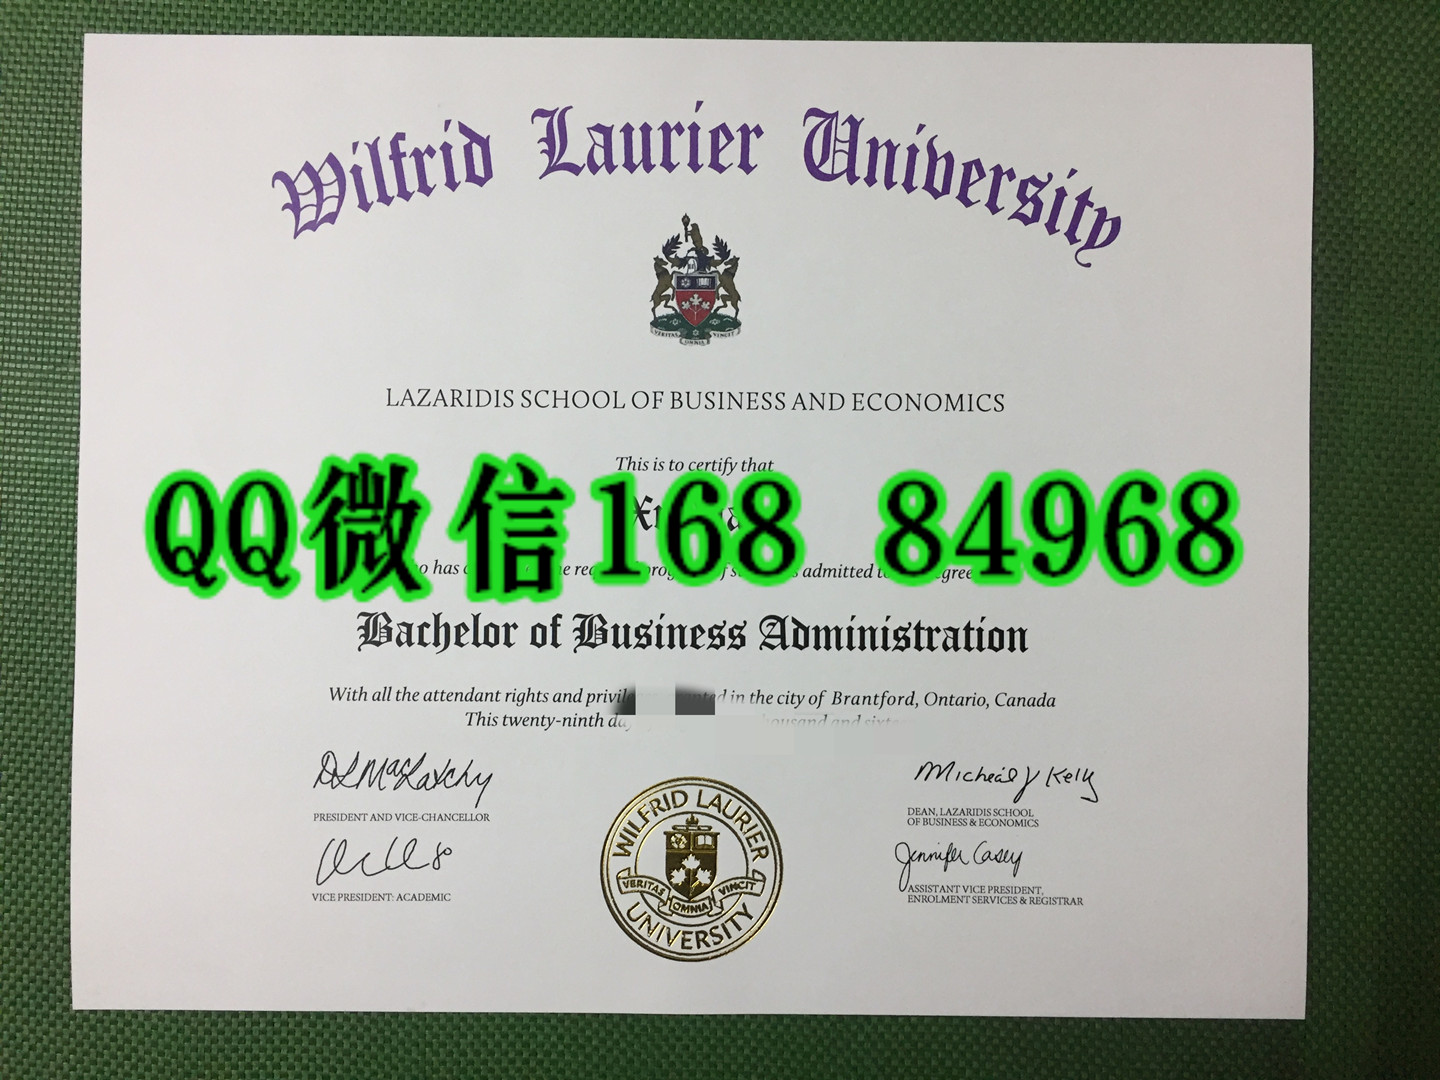 加拿大劳瑞尔大学毕业证案例分享，Wilfrid Laurier University diploma degree